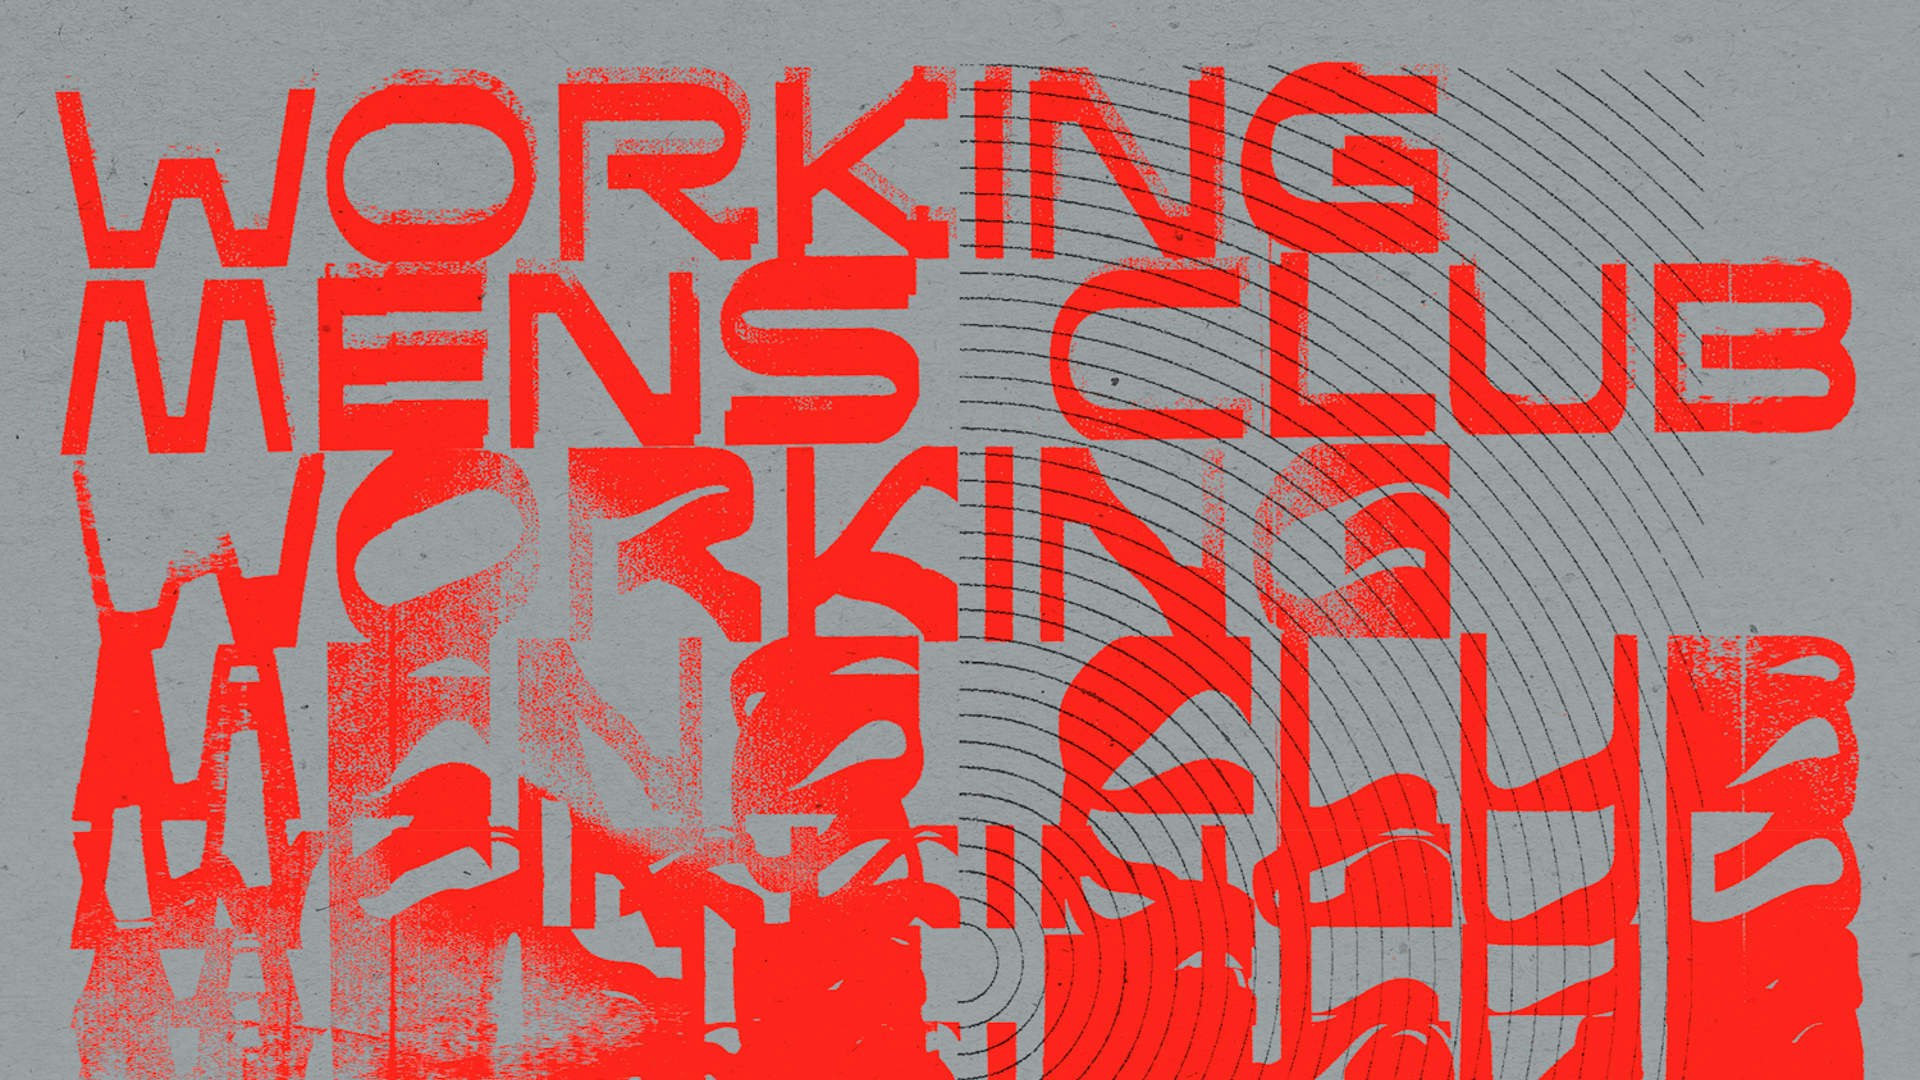 Working Men’s Club